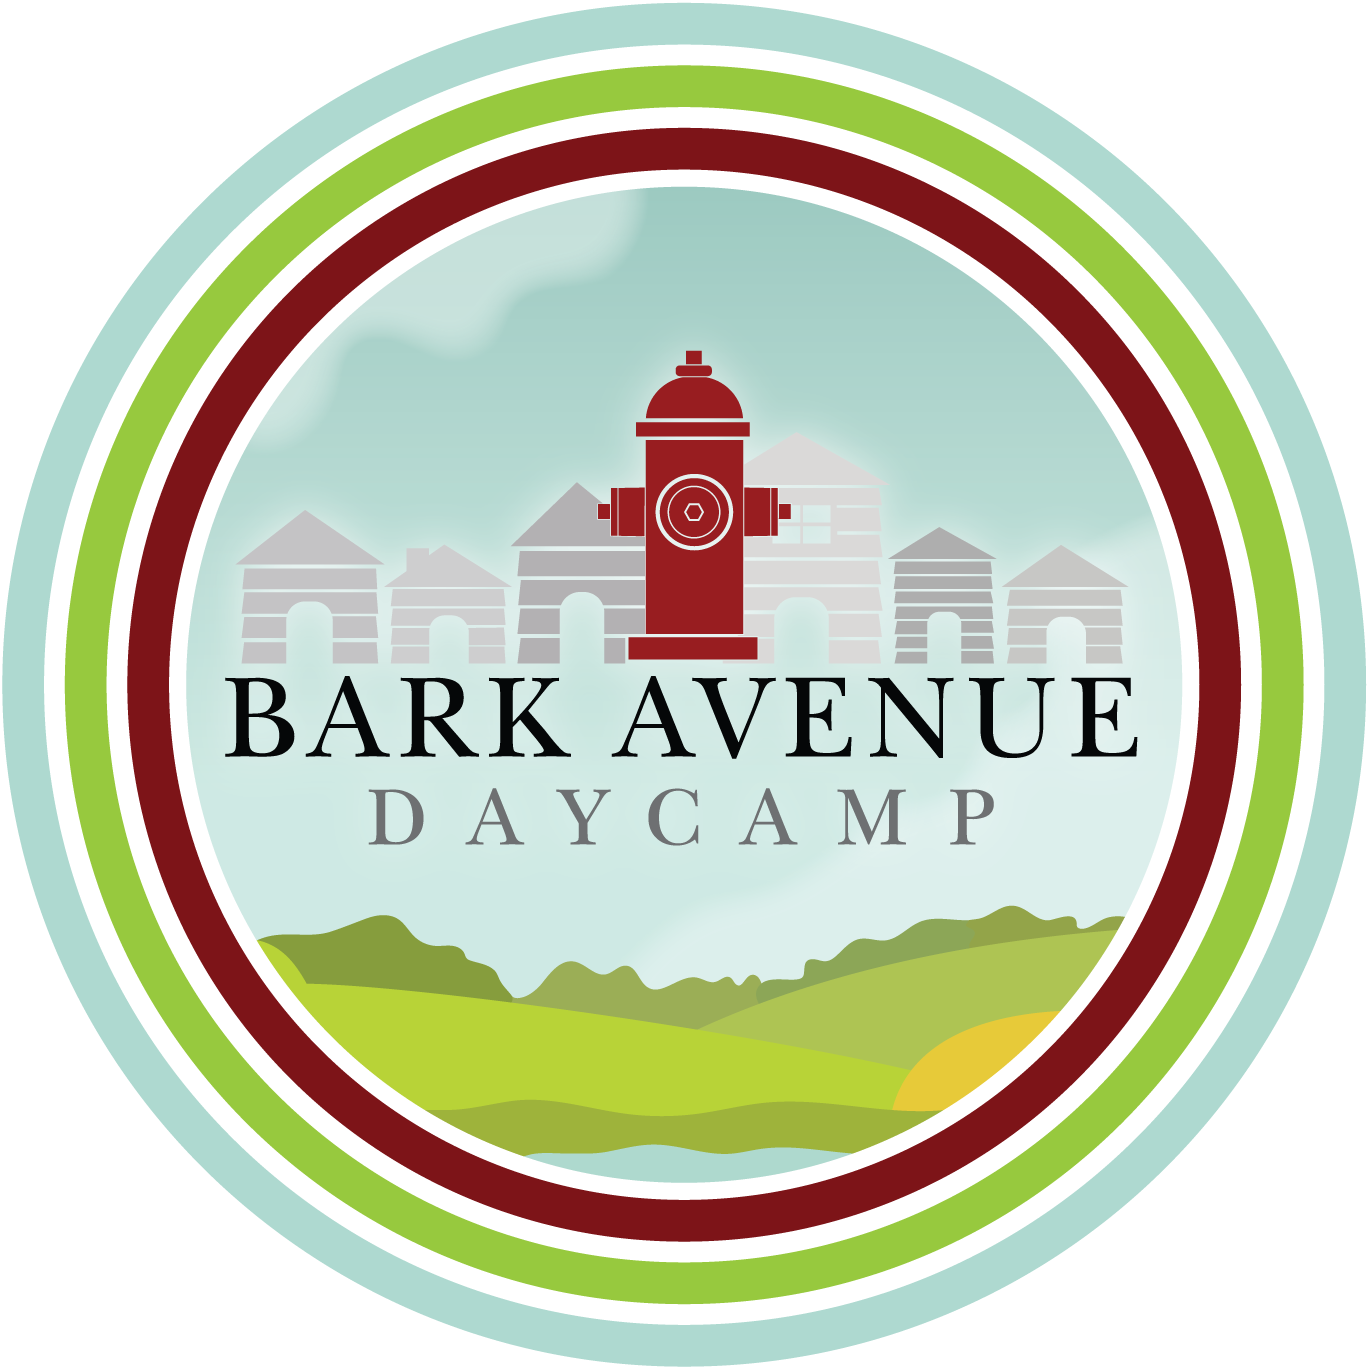  Bark Avenue Daycamp - Bartlett, IL   https://barkavenuedaycamp.com/  